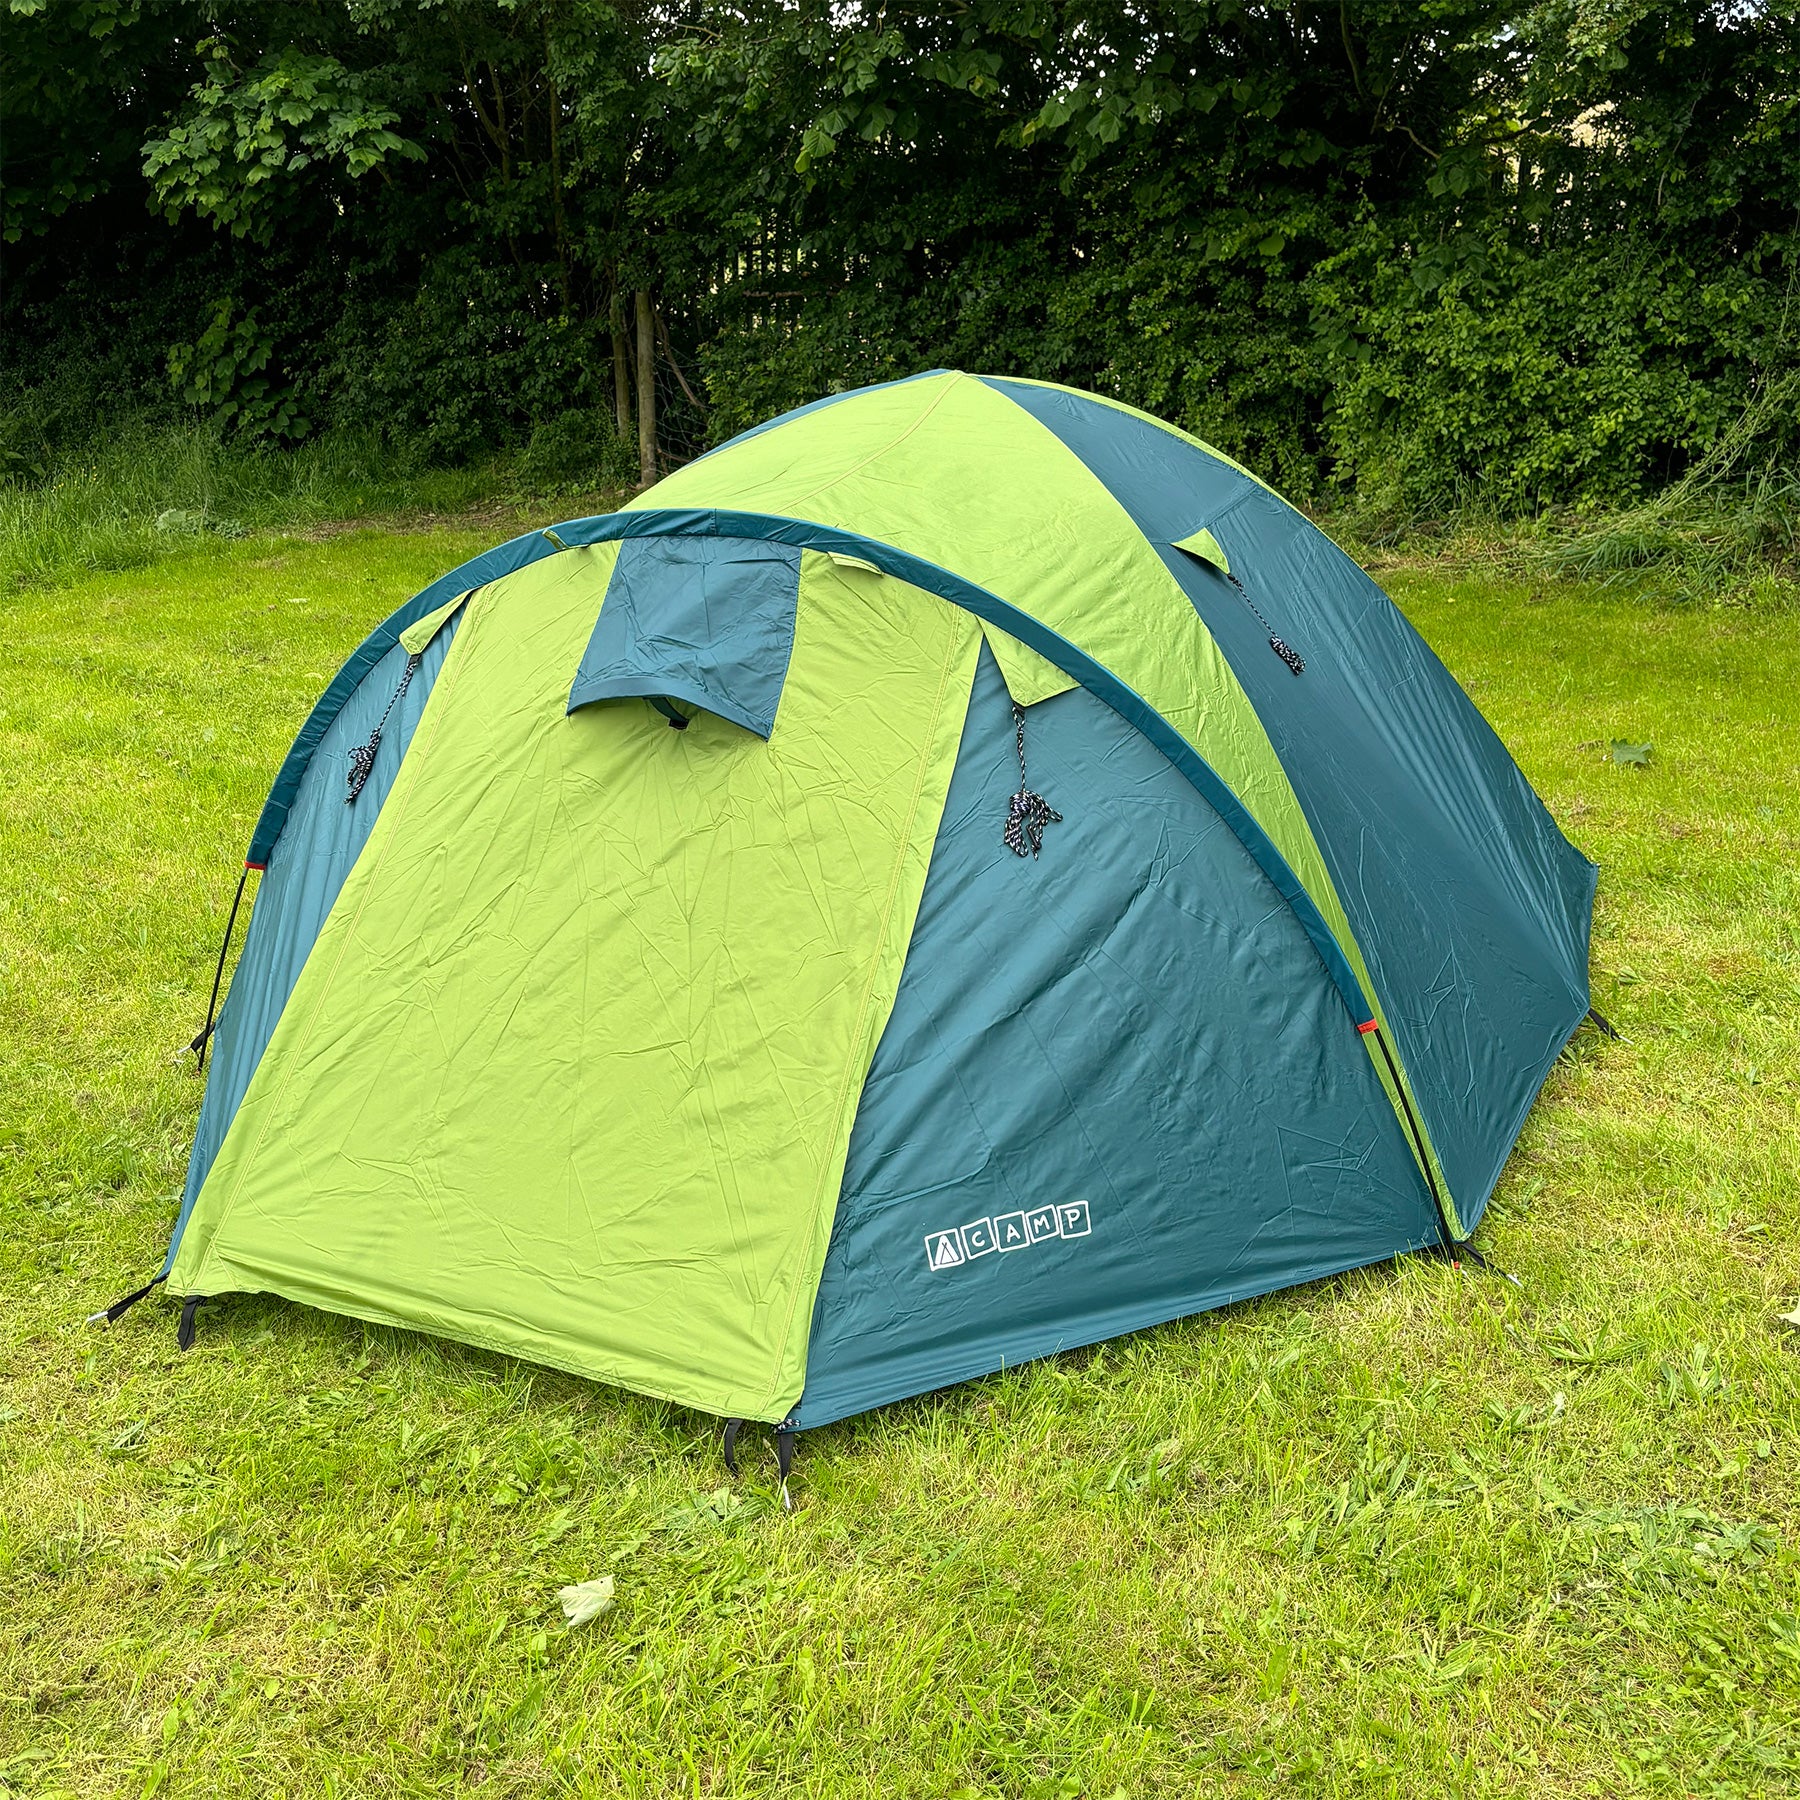 Tambu Acamp 3-4 Person Dome Tent - Dark Turquoise / Olive Green - 55% OFF